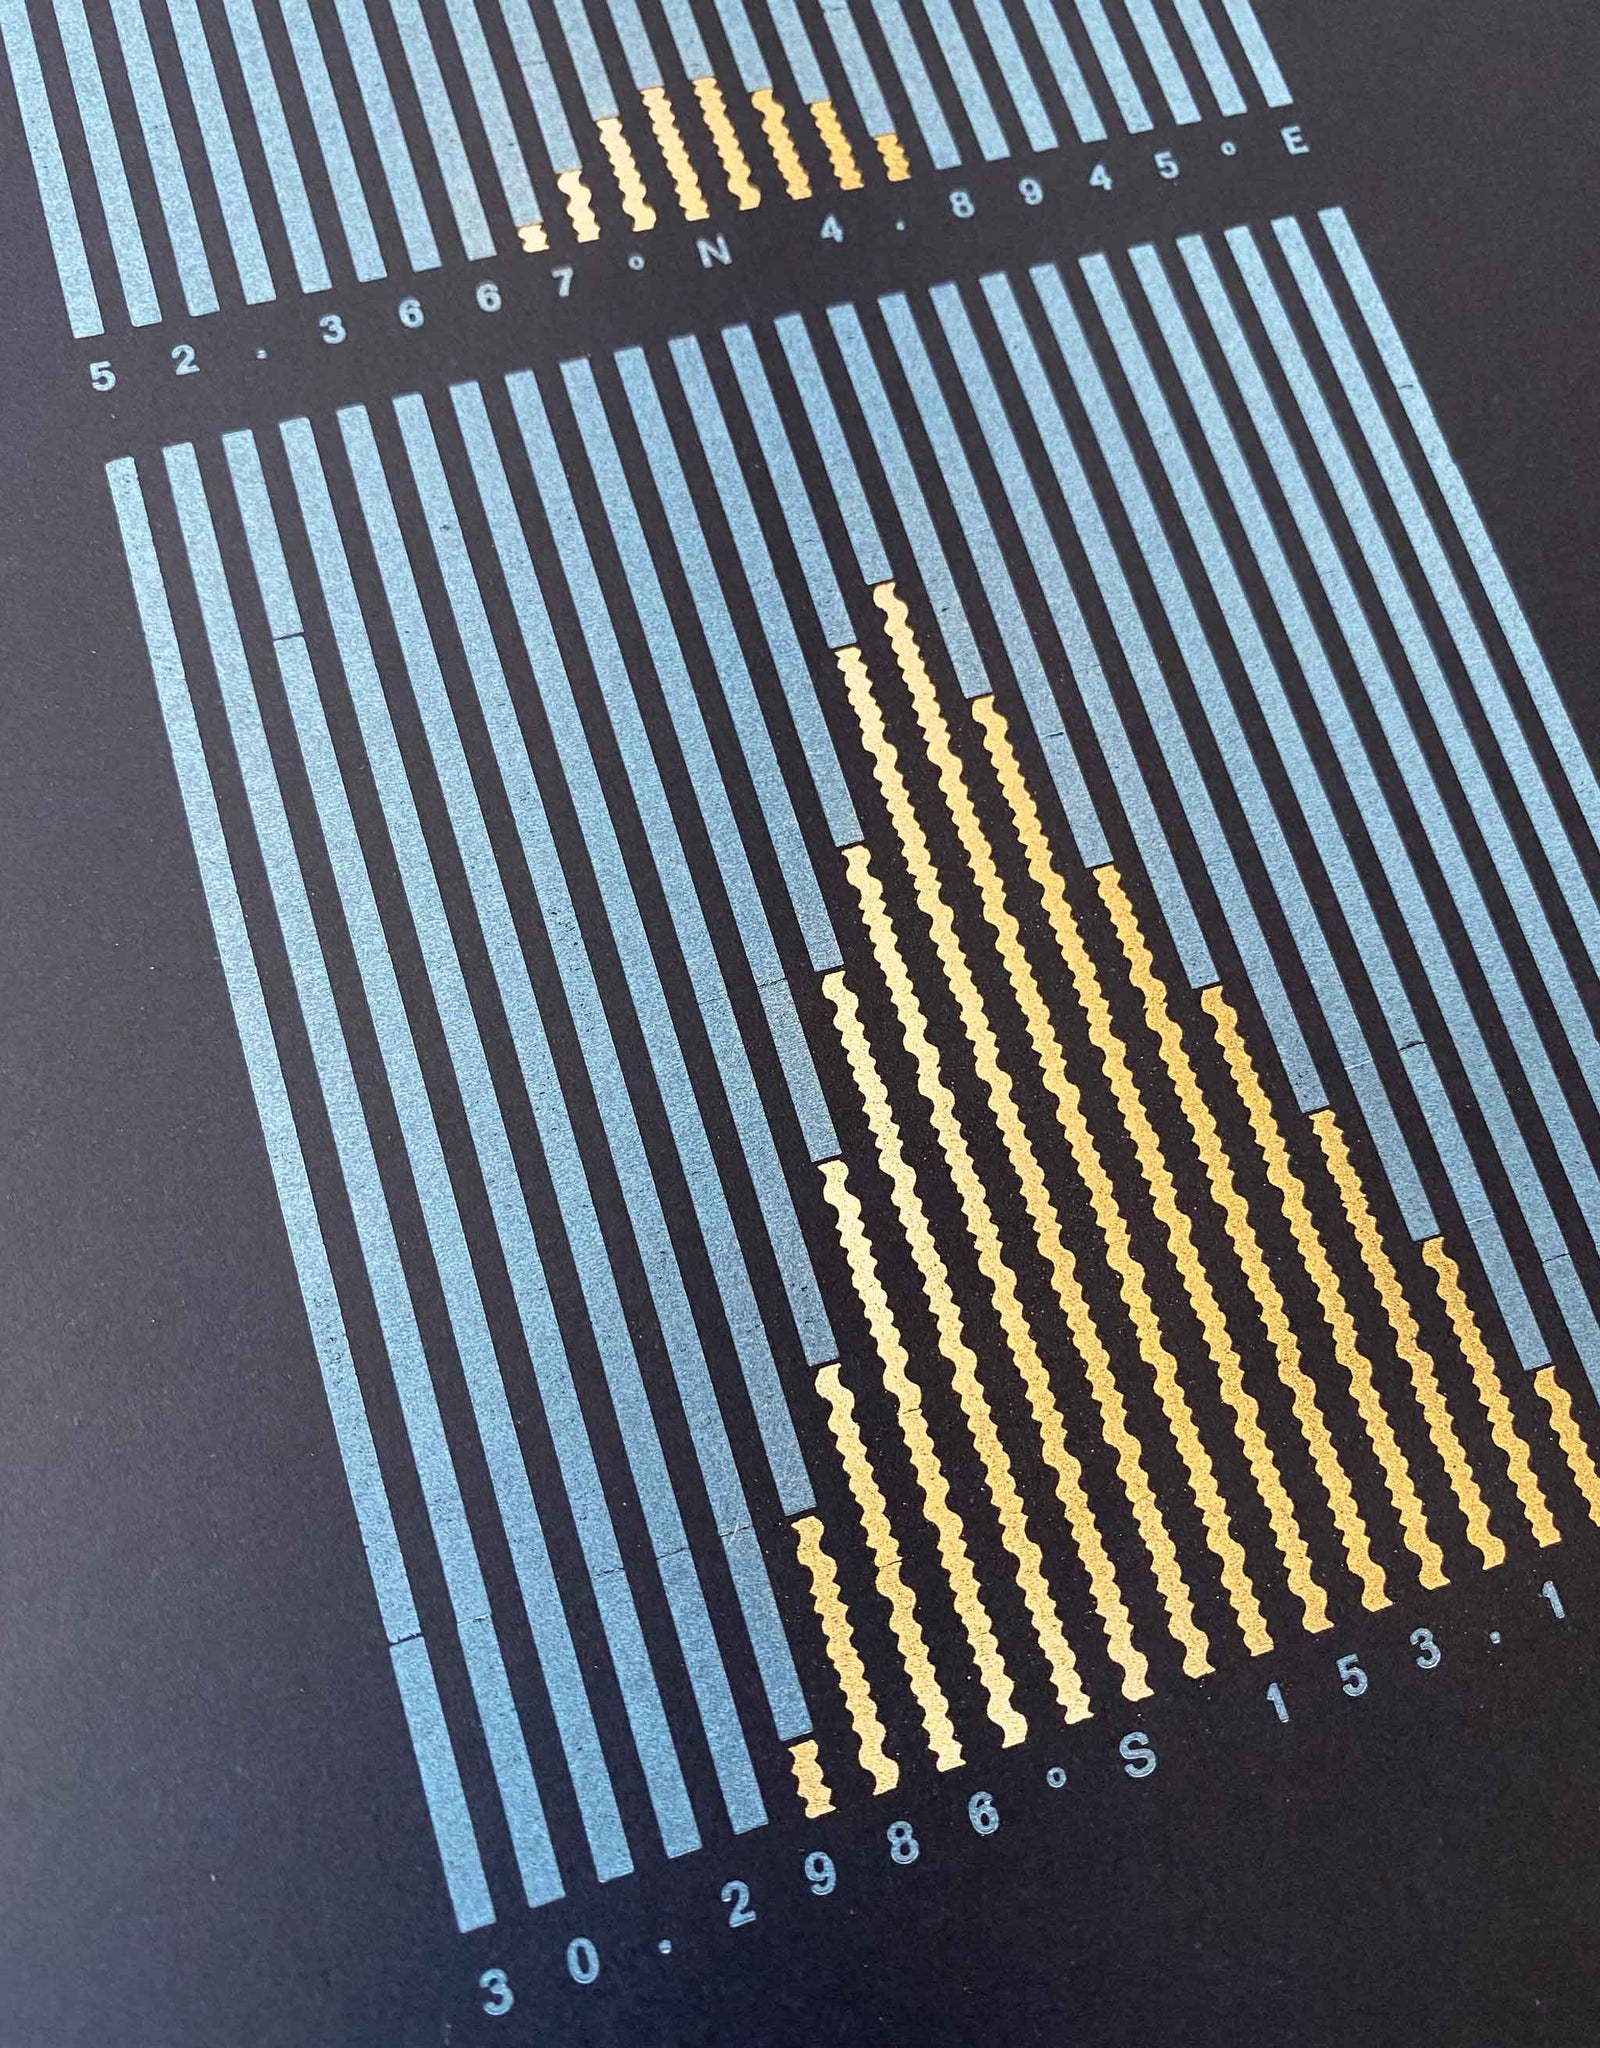 Detail of Letterpress data print Sunlight Hours. Light blue and gold vertical lines on dark blue background.